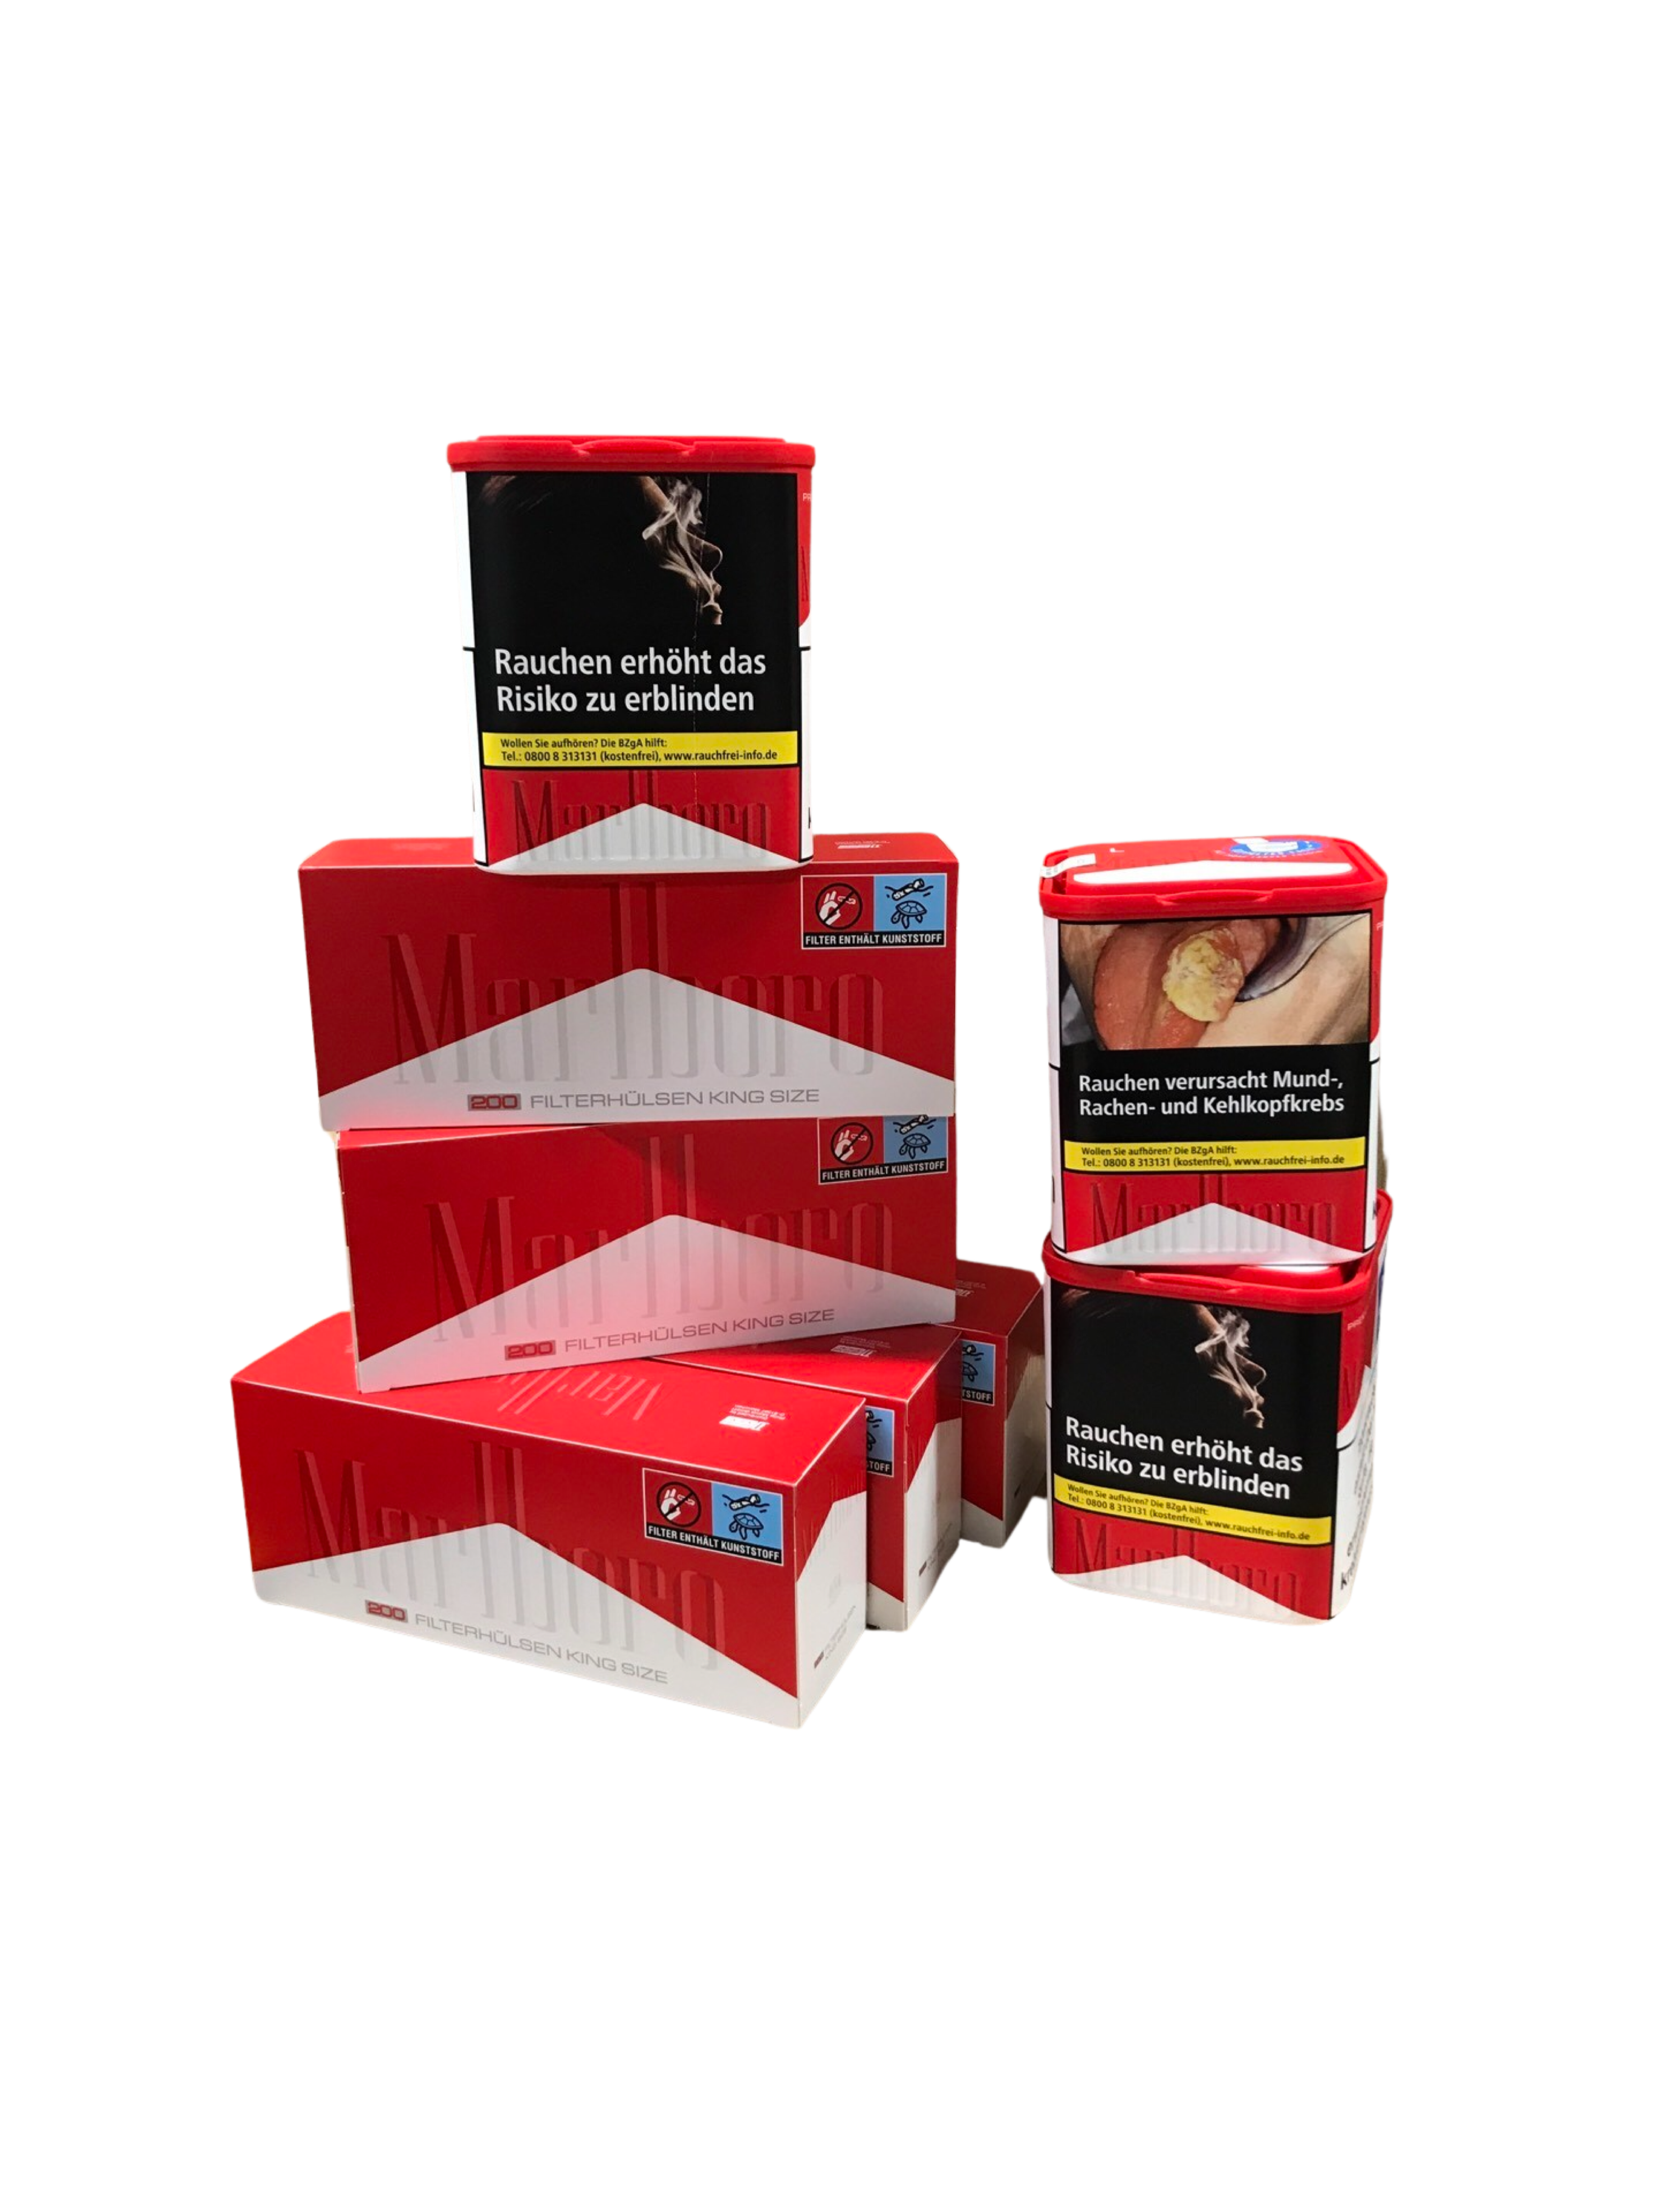 3 x MARLBORO Premium Tobacco Red 110g + 1000 Marlboro Red Hülsen